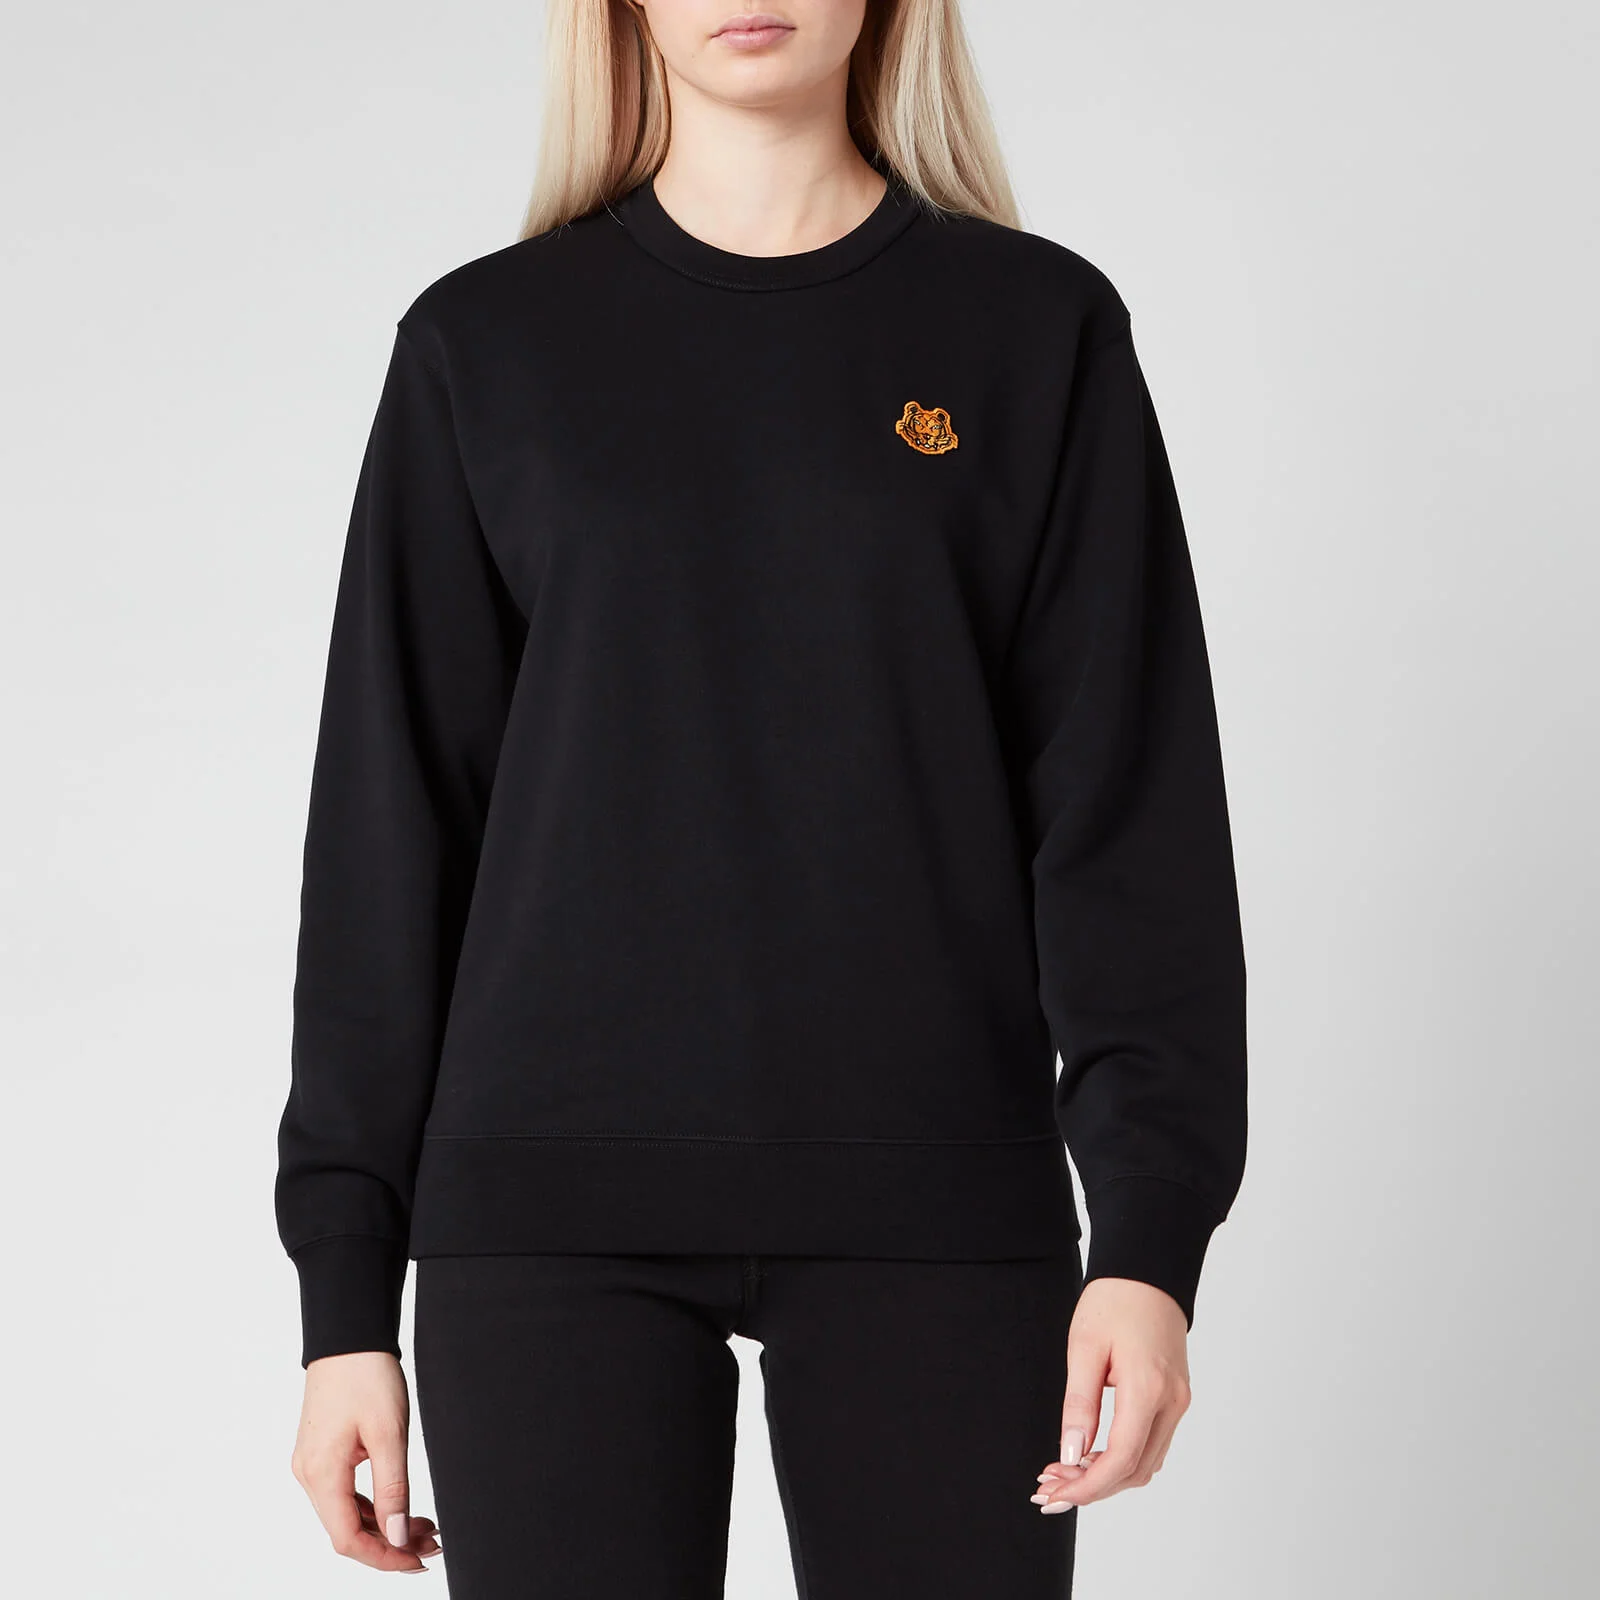 KENZO Women's Classic Fit Sweatshirt Tiger Crest - Black Image 1